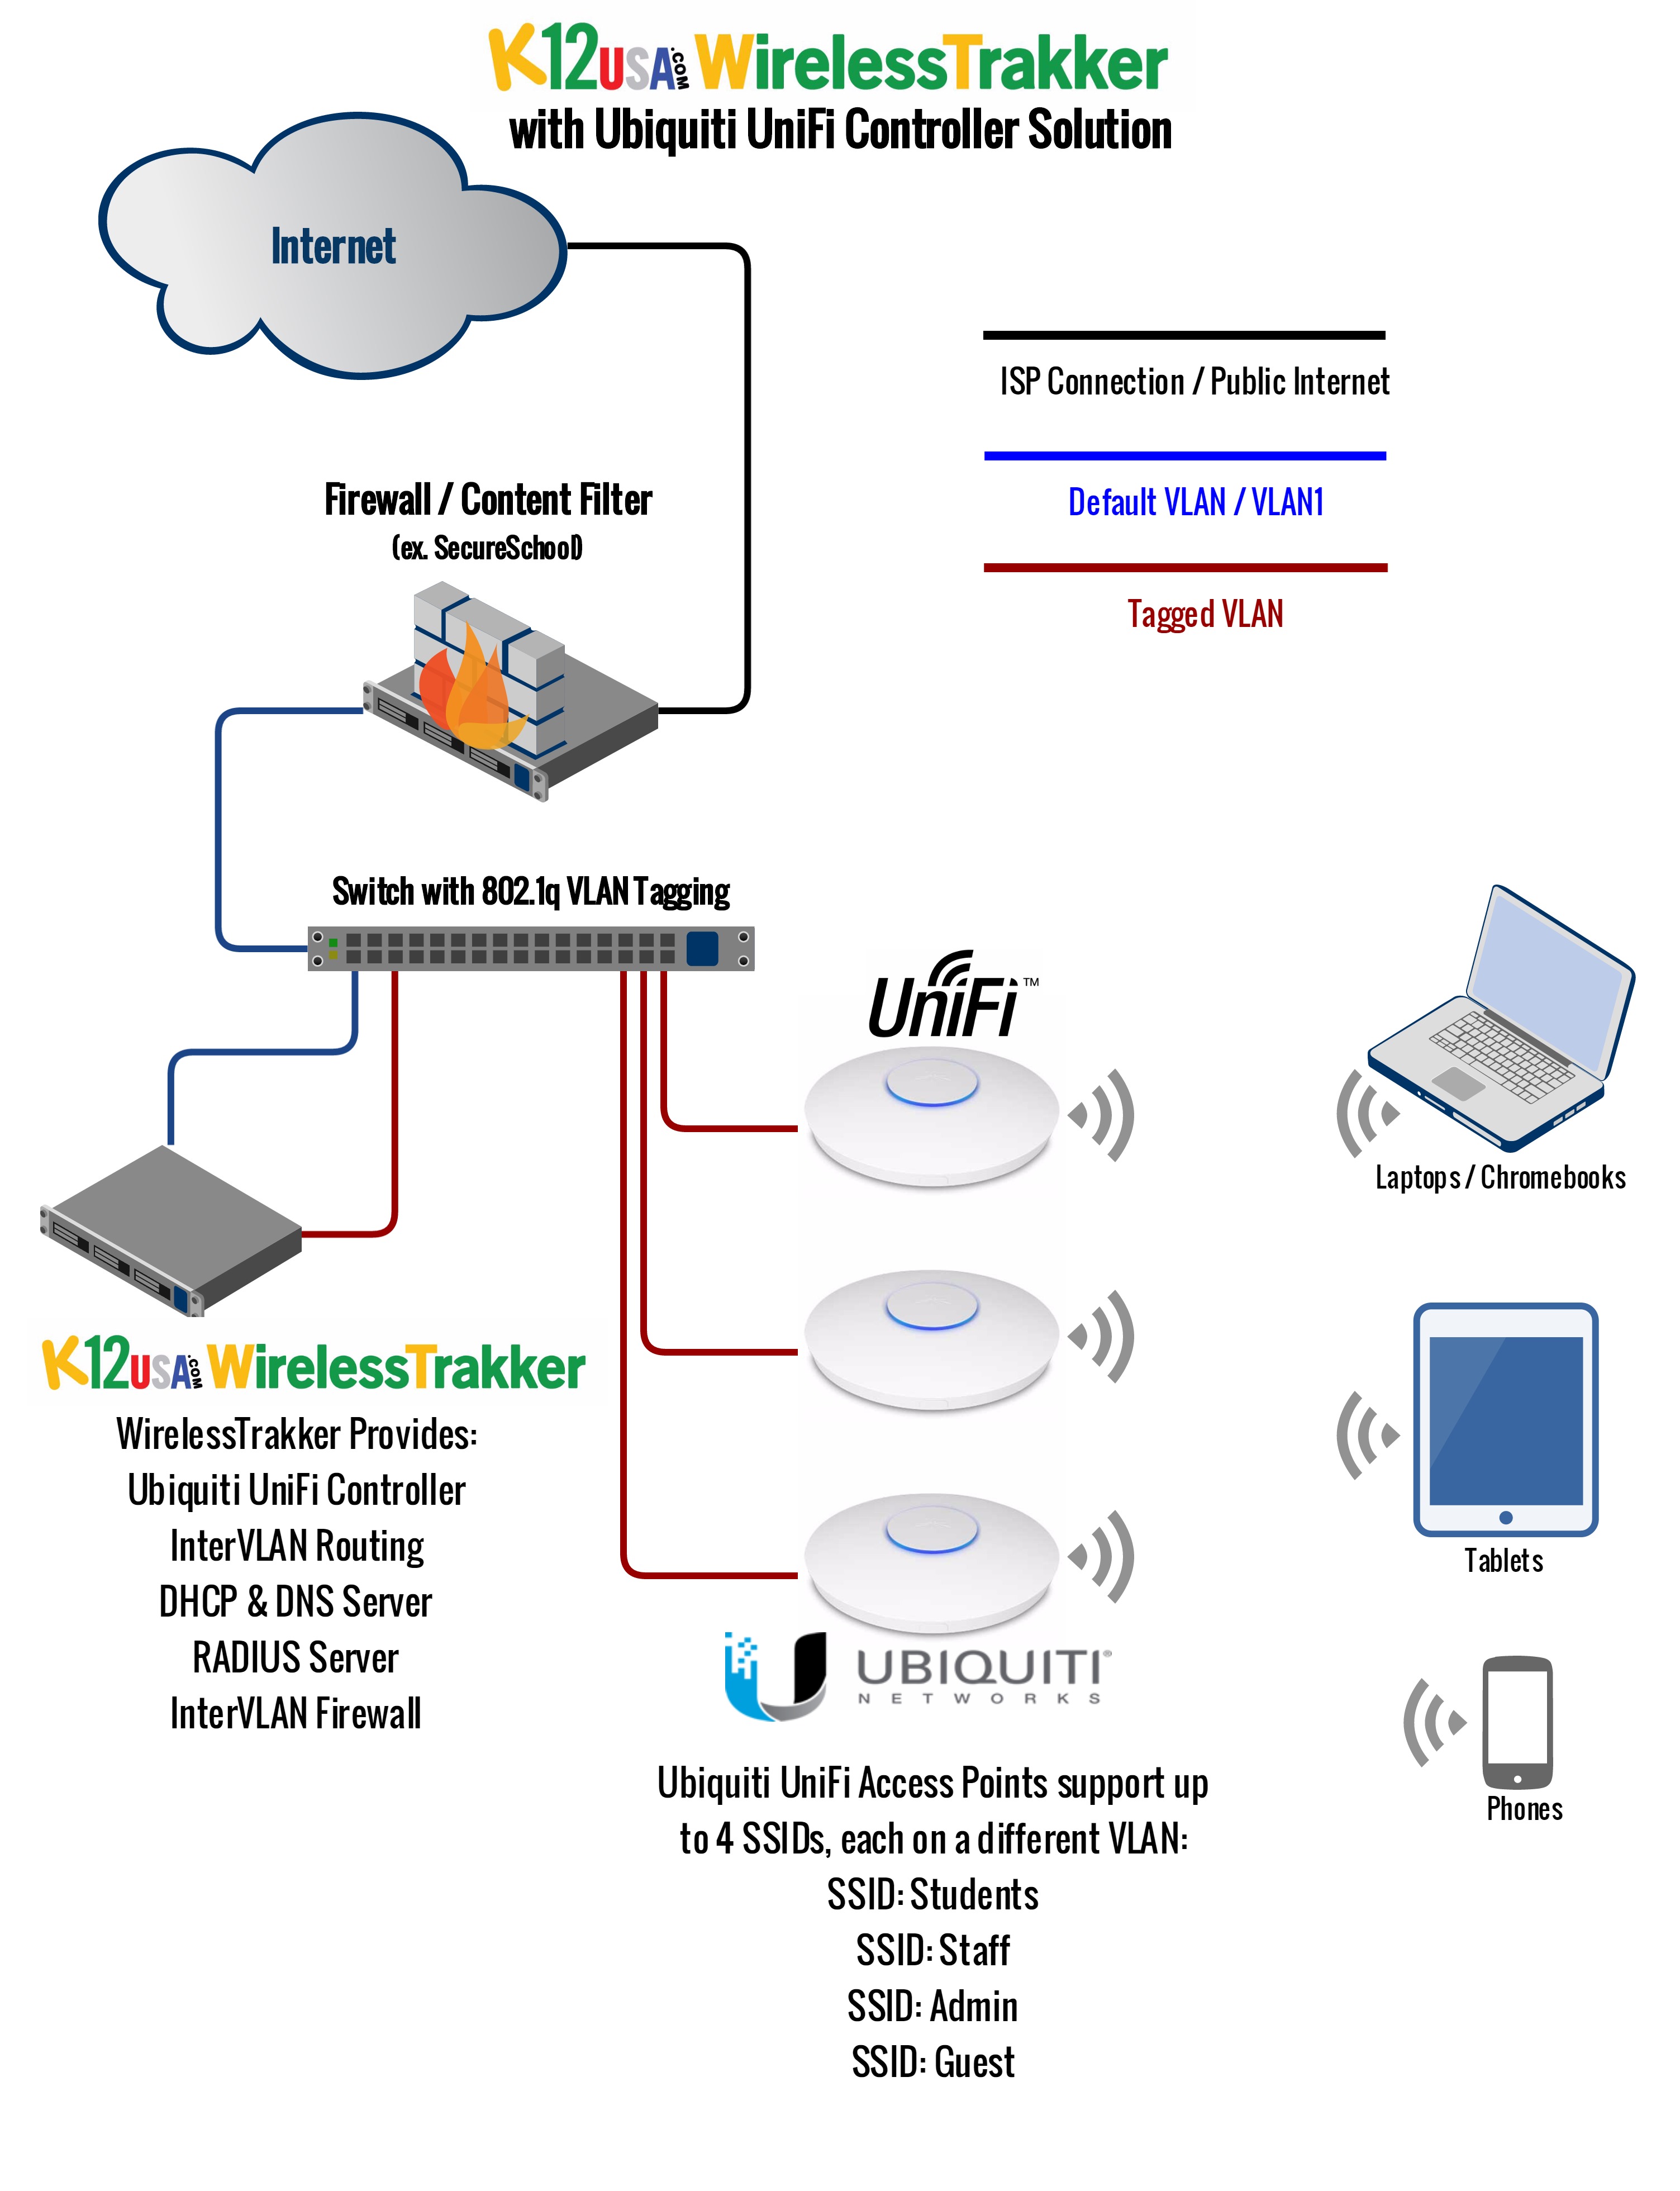 ubiquiti wireless access points